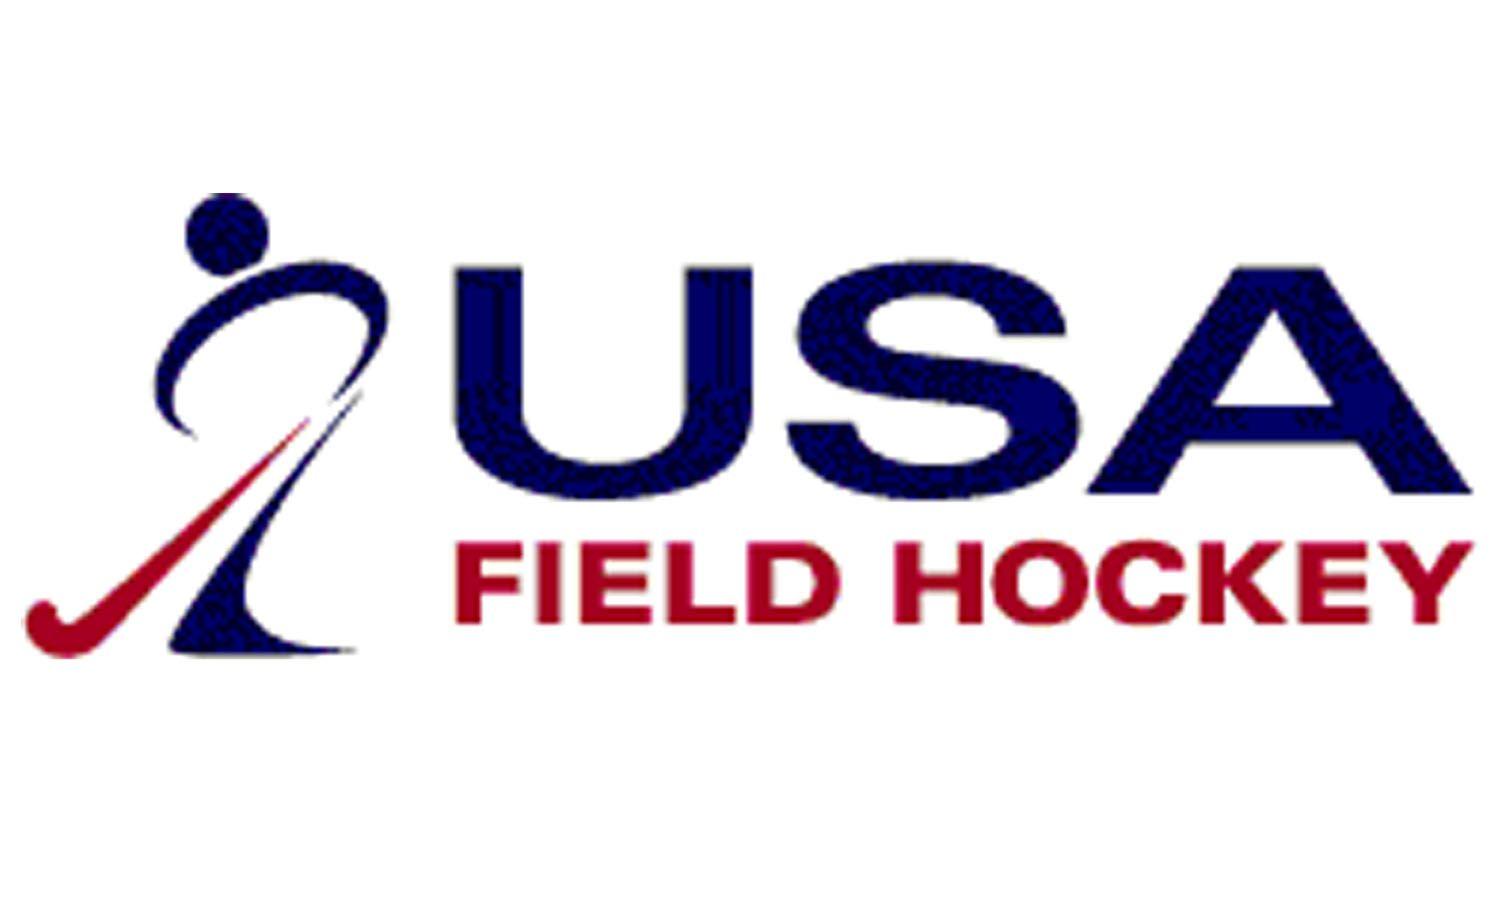 Field hockey Logos